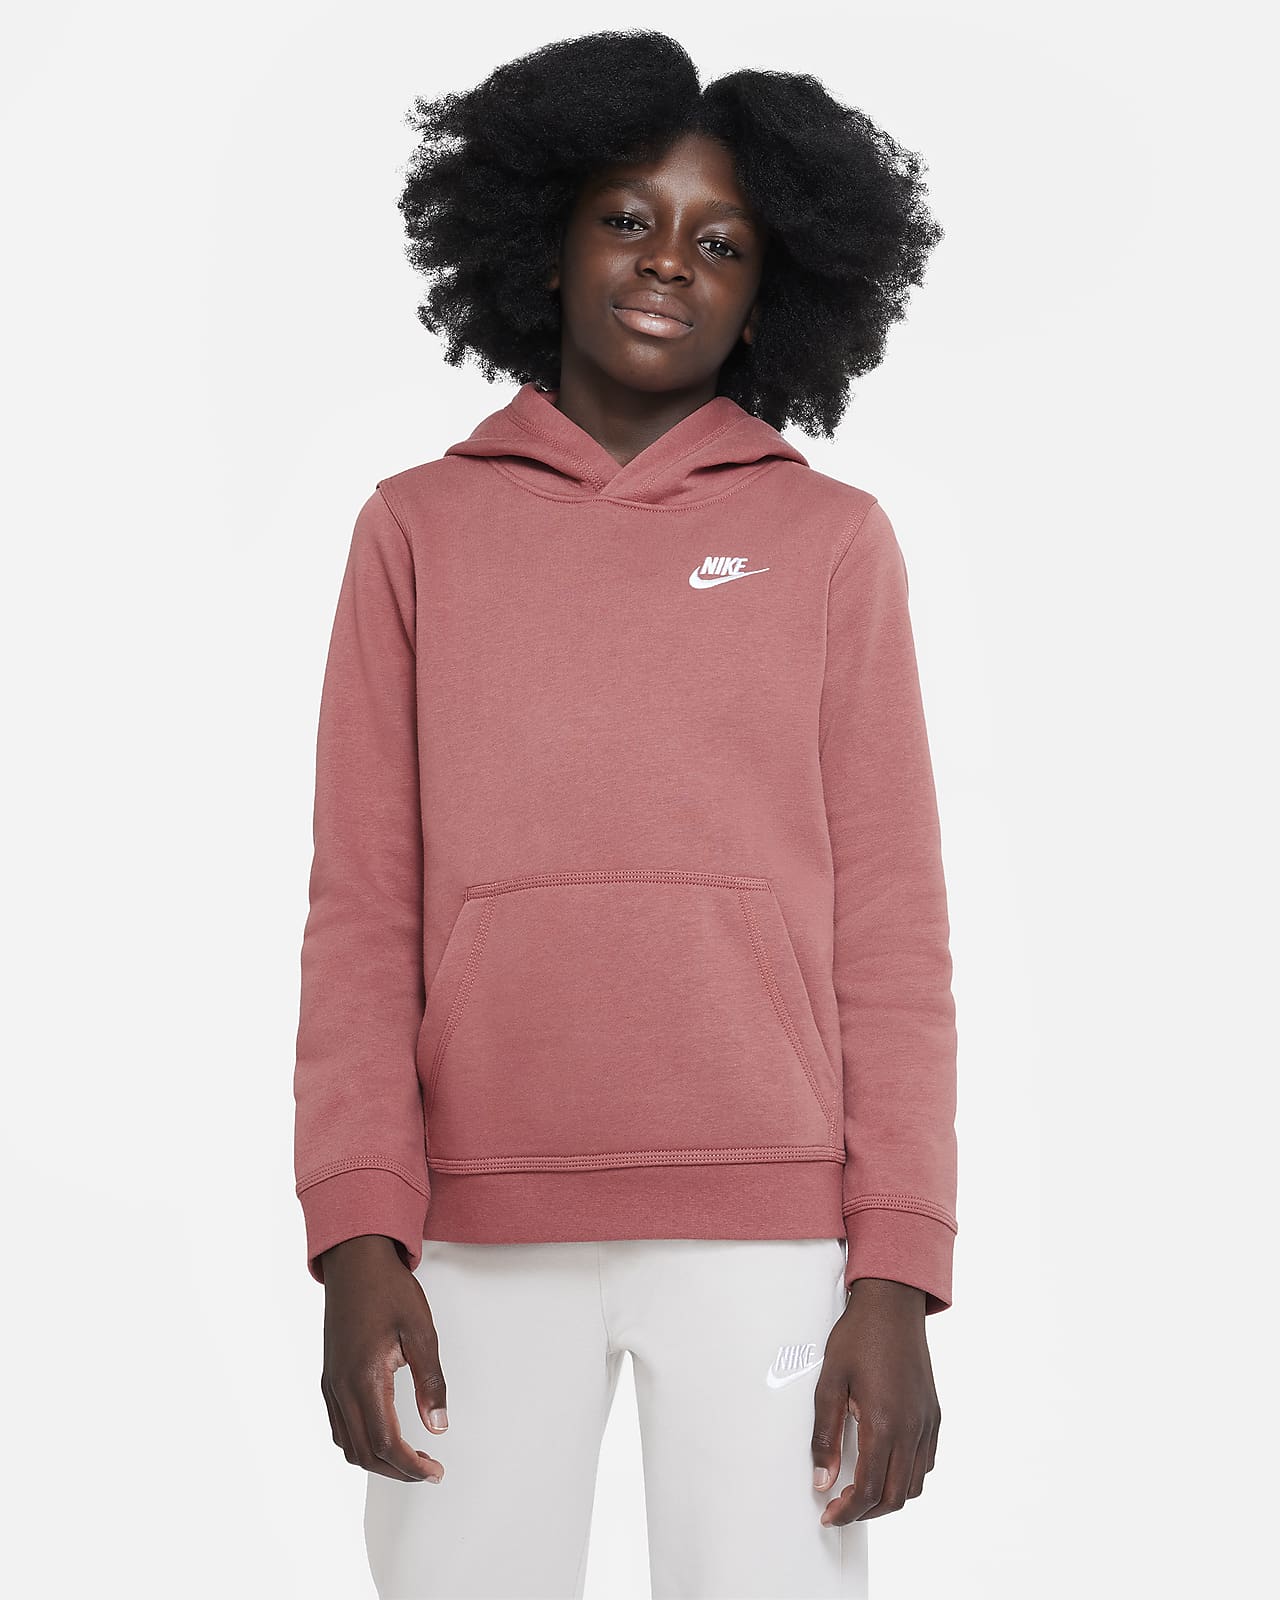 Nike Sportswear Club Dessuadora amb caputxa - Nen/a